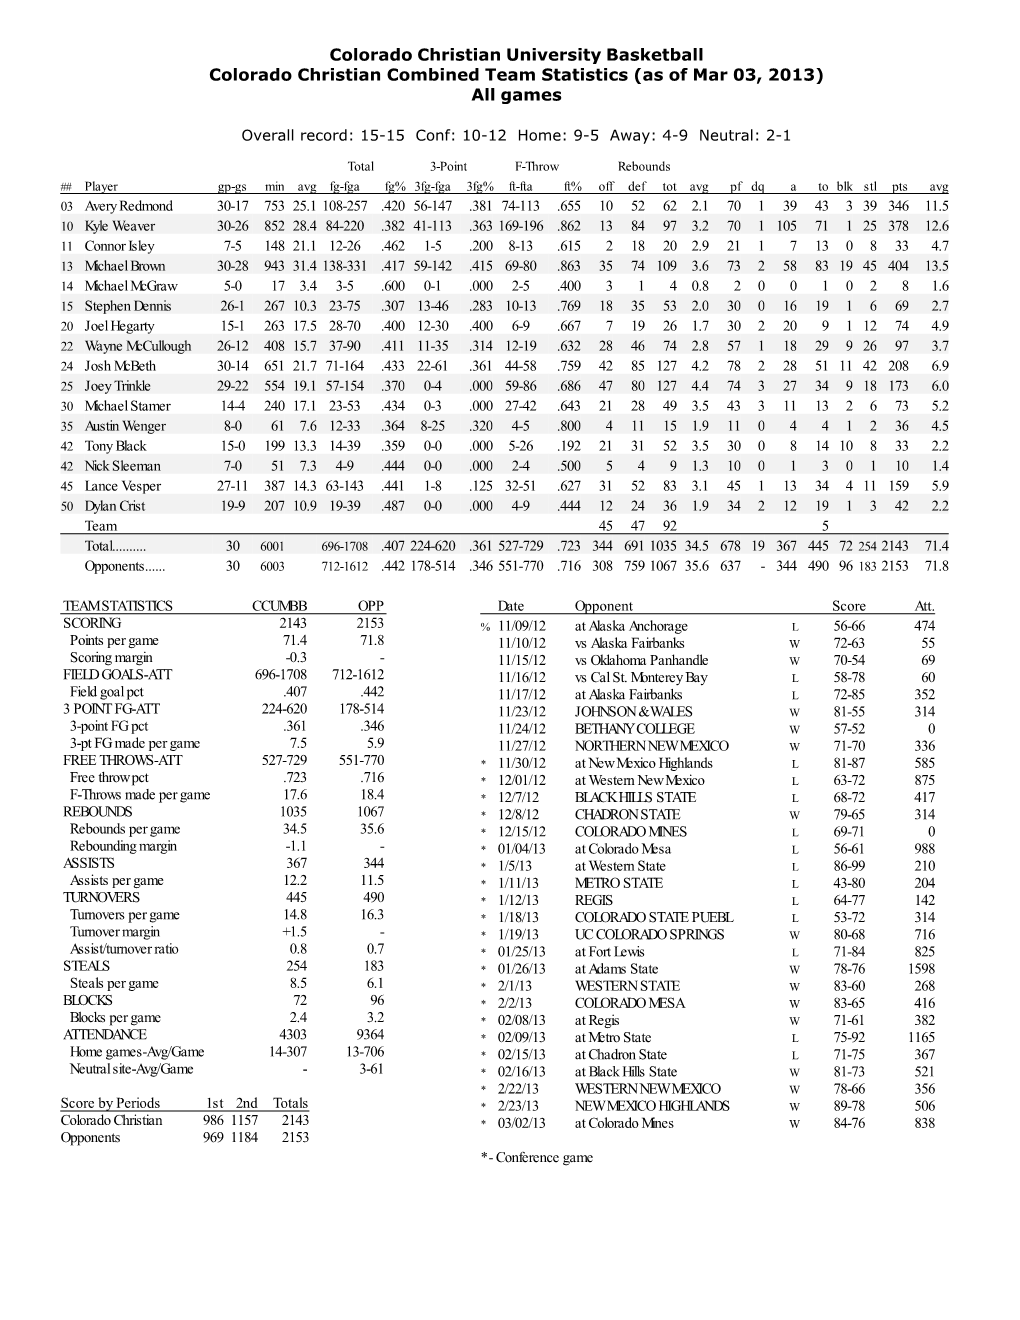 Colorado Christian University Basketball Colorado Christian Combined Team Statistics (As of Mar 03, 2013) All Games